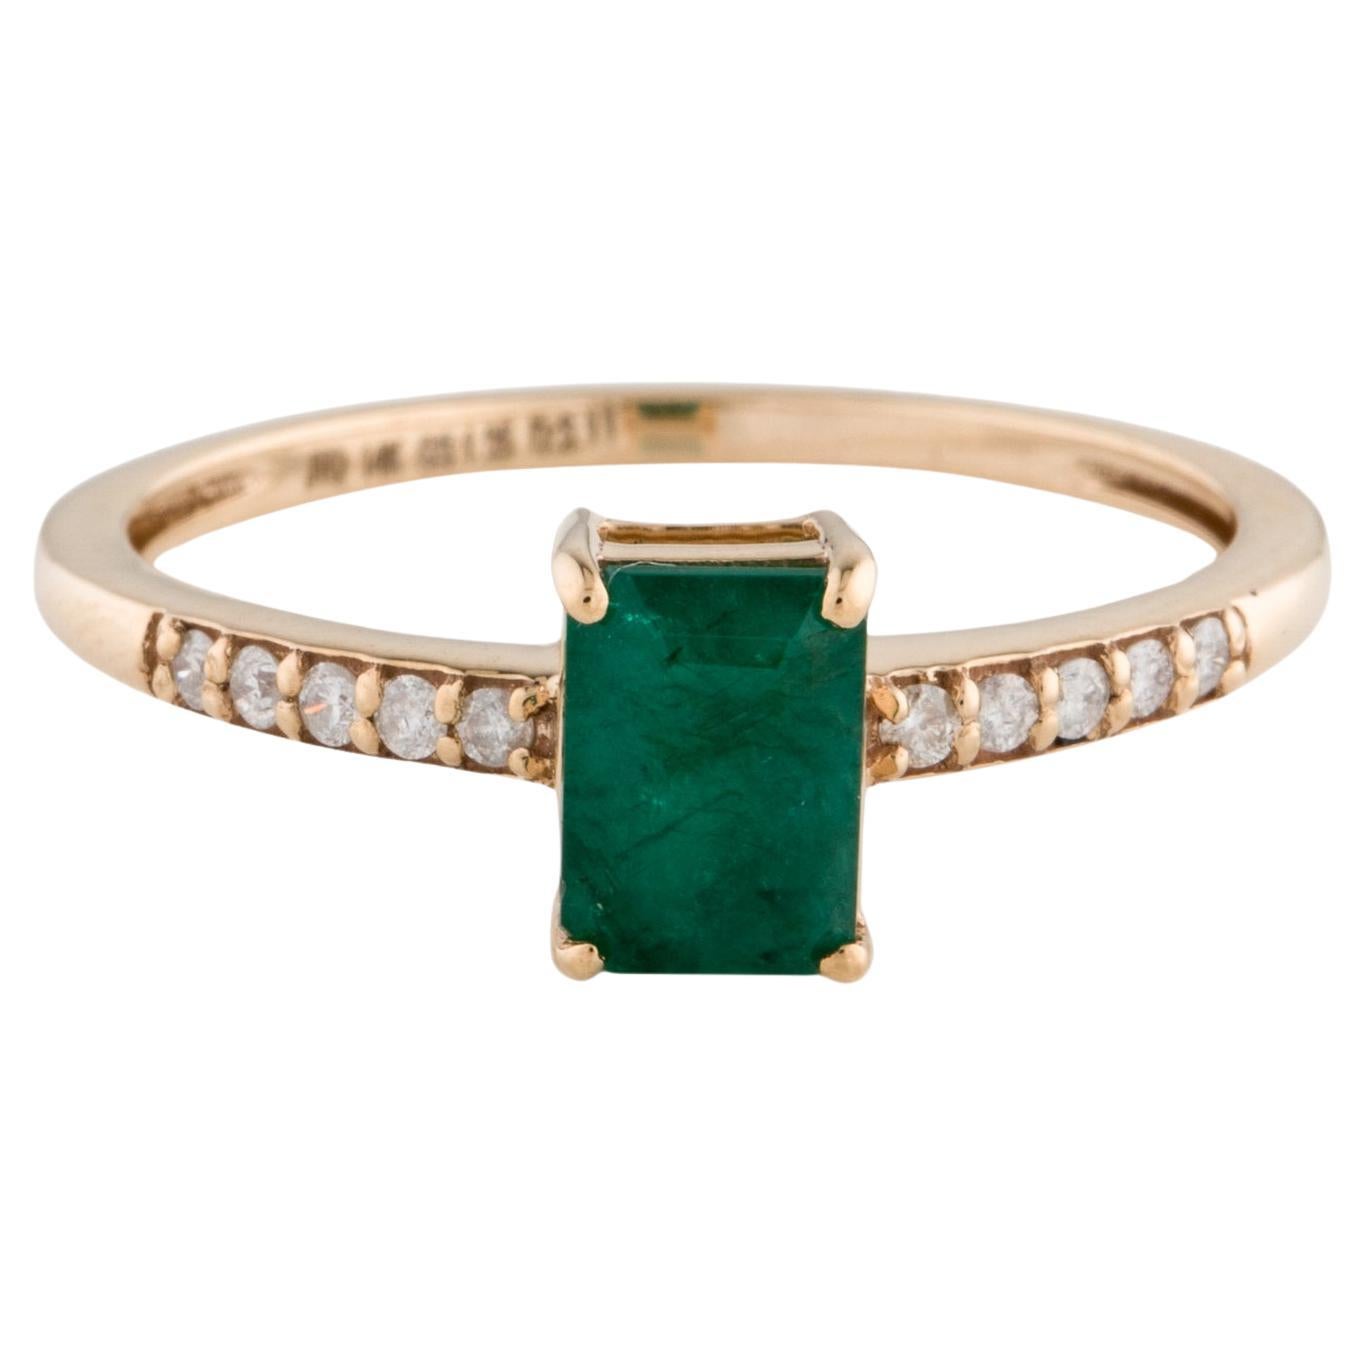 Elegant 14K Gold 1.05ct Emerald & Diamond Ring - Size 8.75 - Classic & Timeless